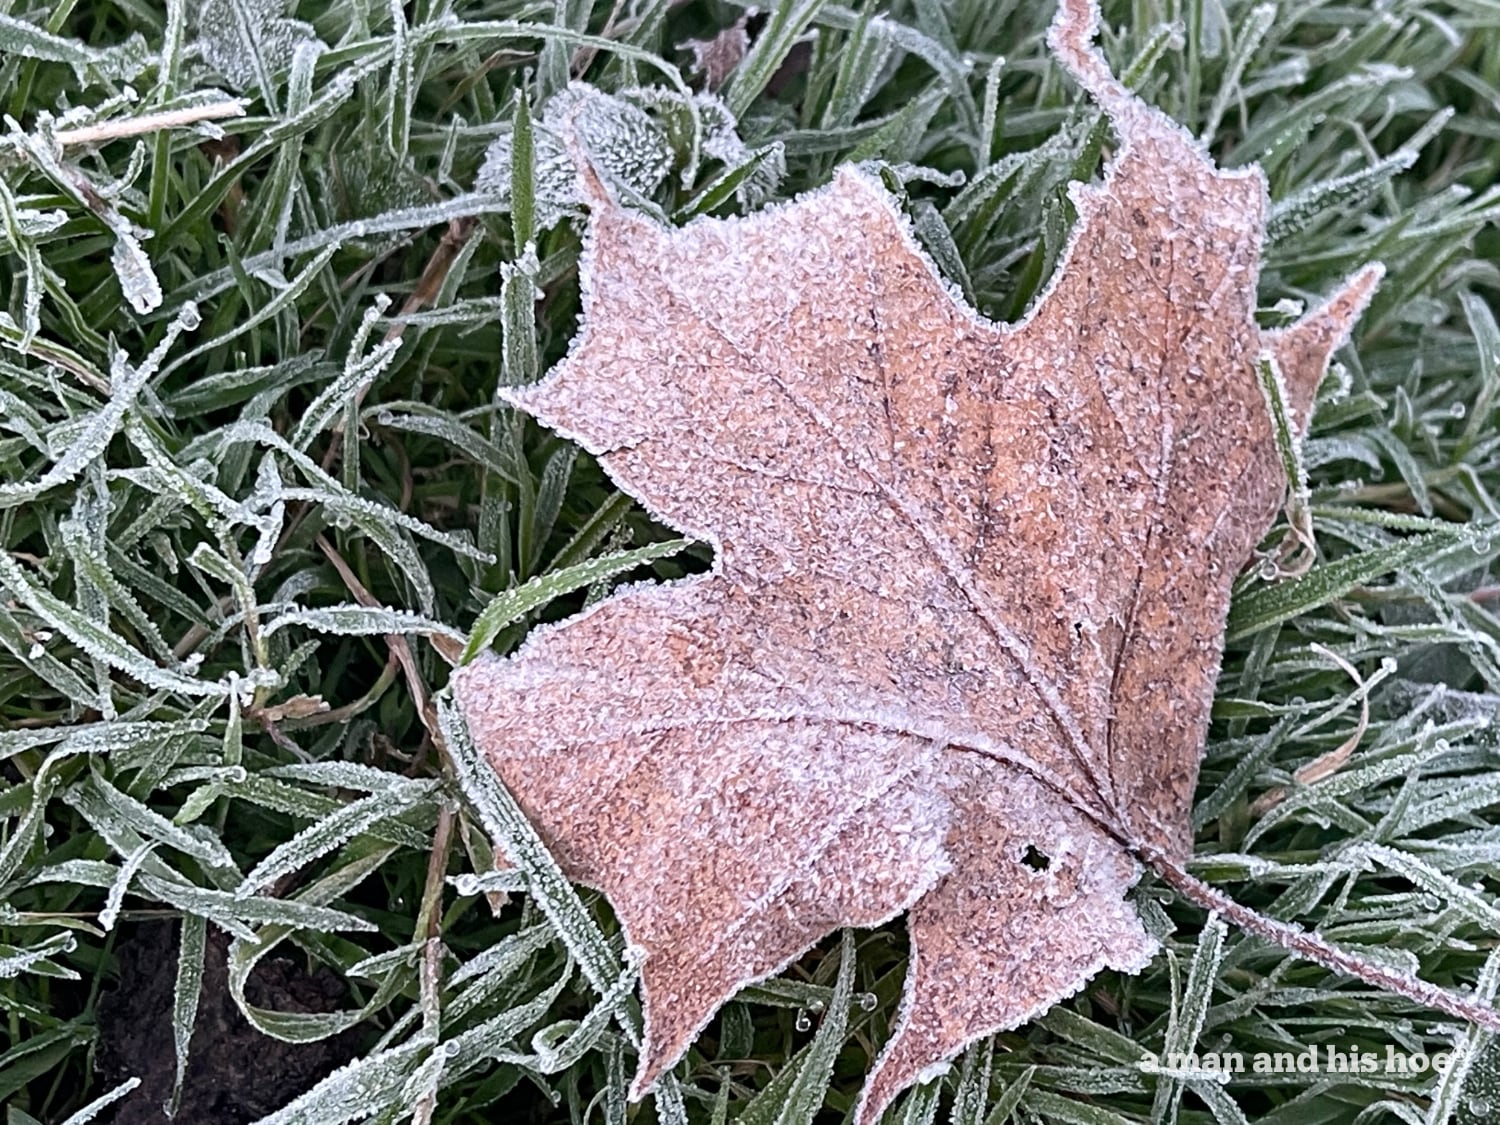 First frost on fallen leaf.